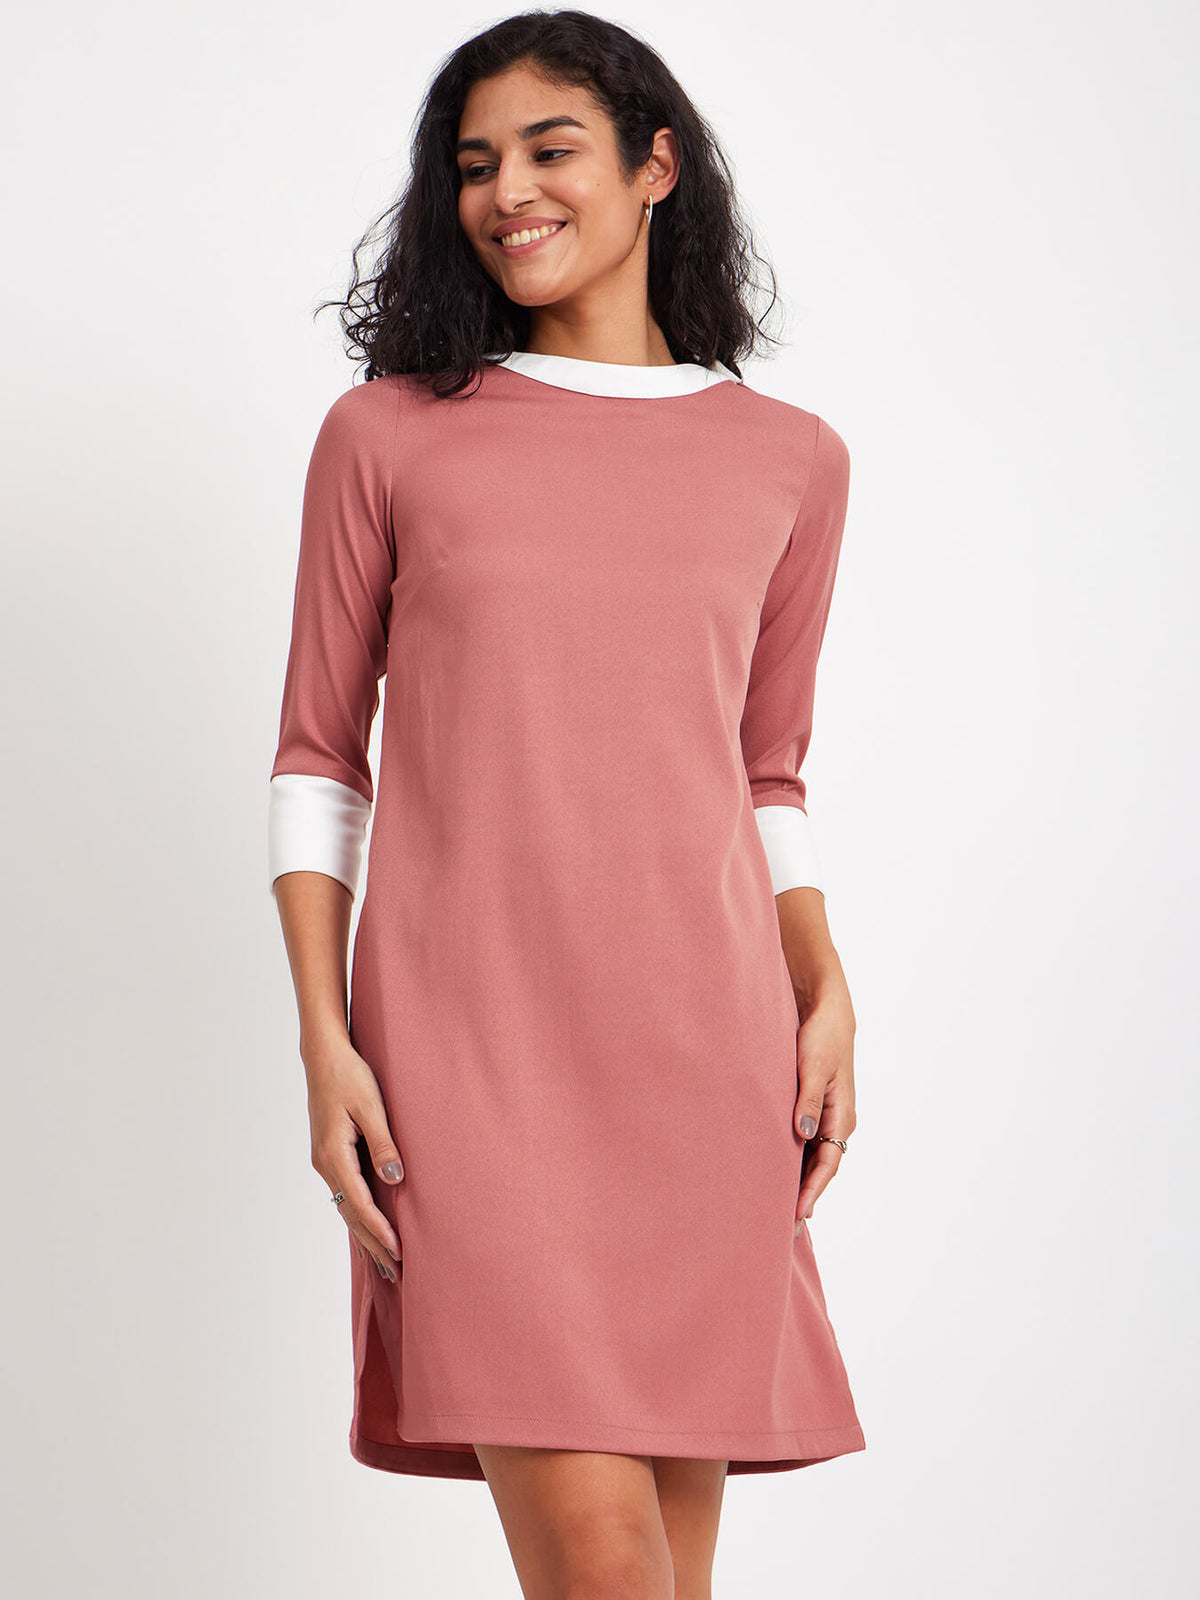 Colour Block Quarter Sleeves Dress - Dusty Pink